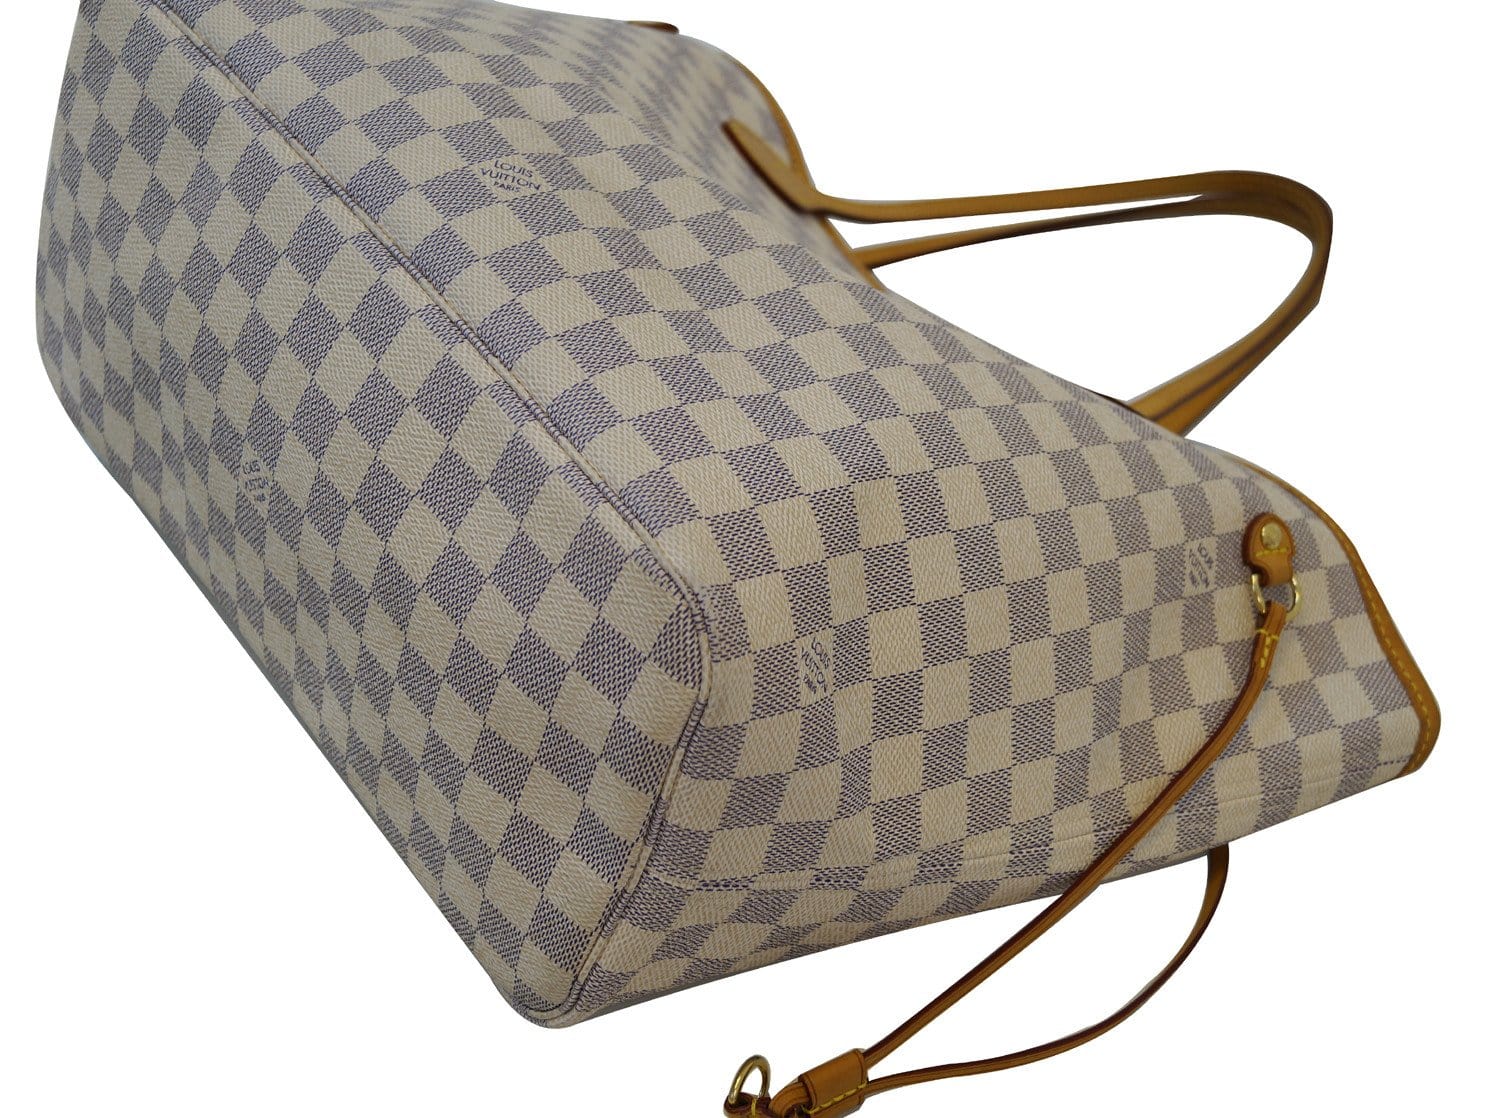 Louis Vuitton Tote Bag Damier Azur Neverfull MM N40471 230913N